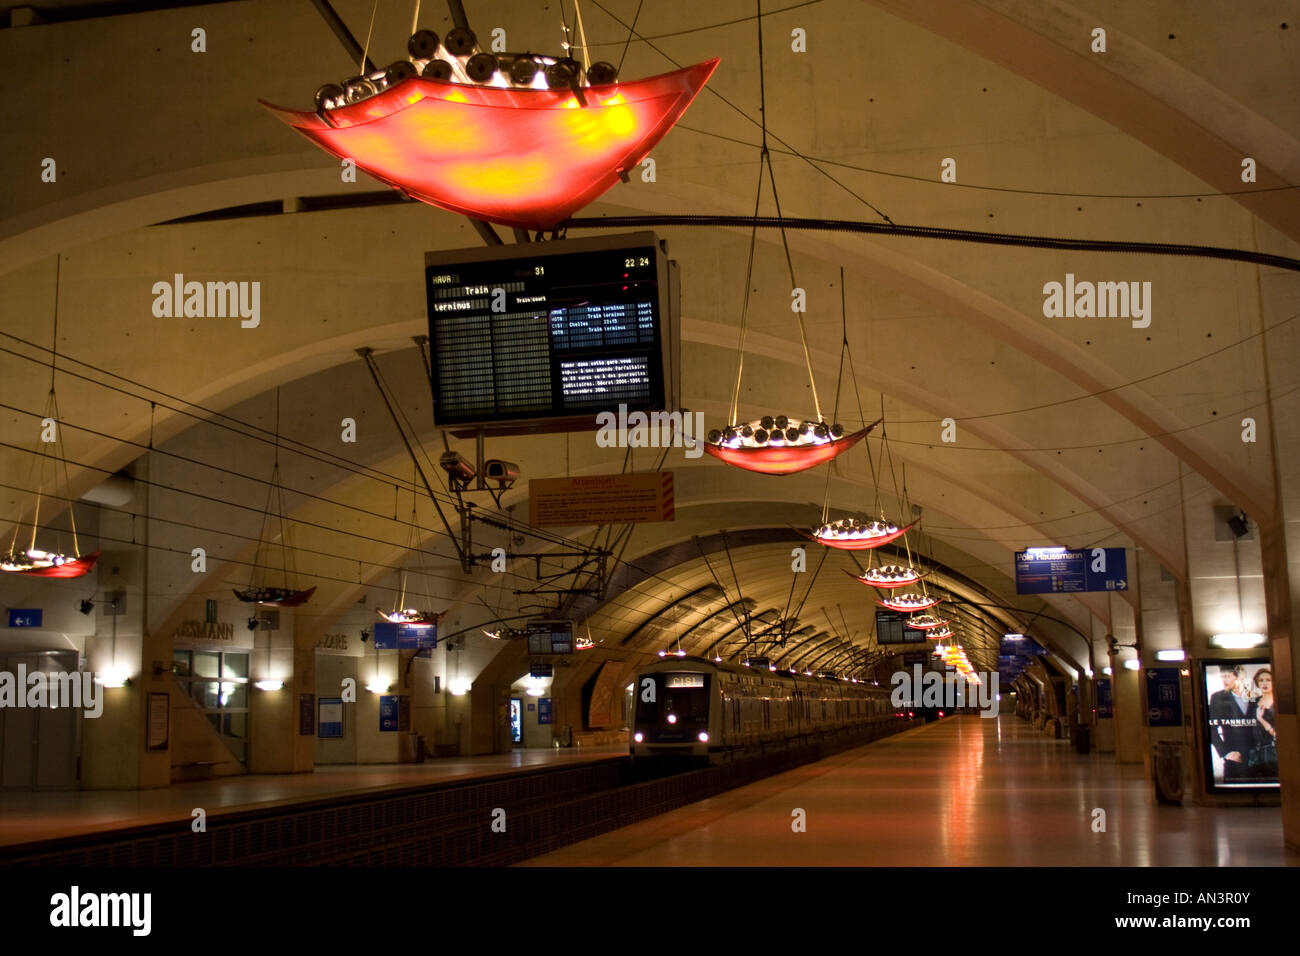 Paris RER and metro station interior Stock Photo